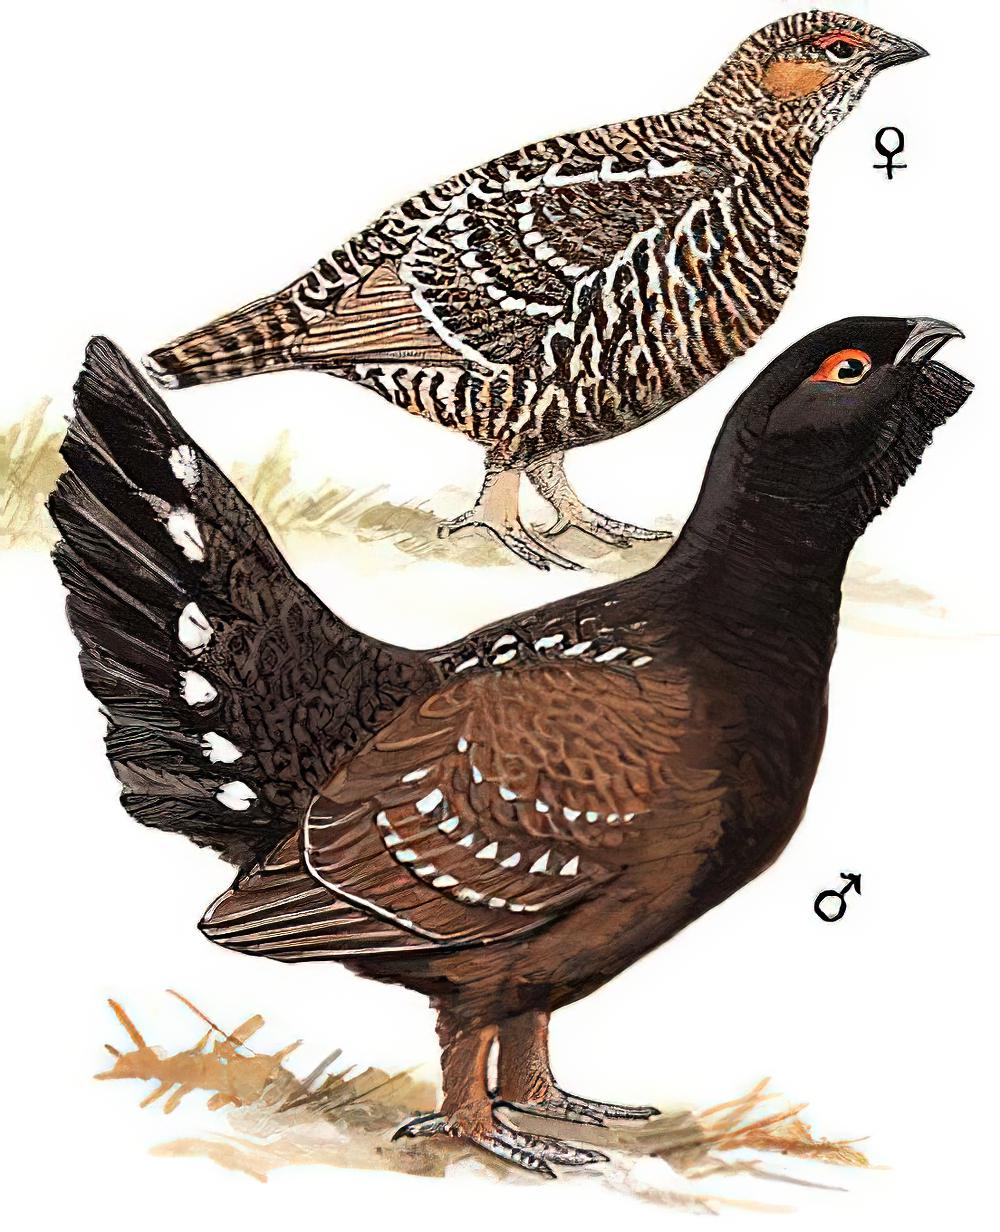 黑嘴松鸡 / Black-billed Capercaillie / Tetrao urogalloides